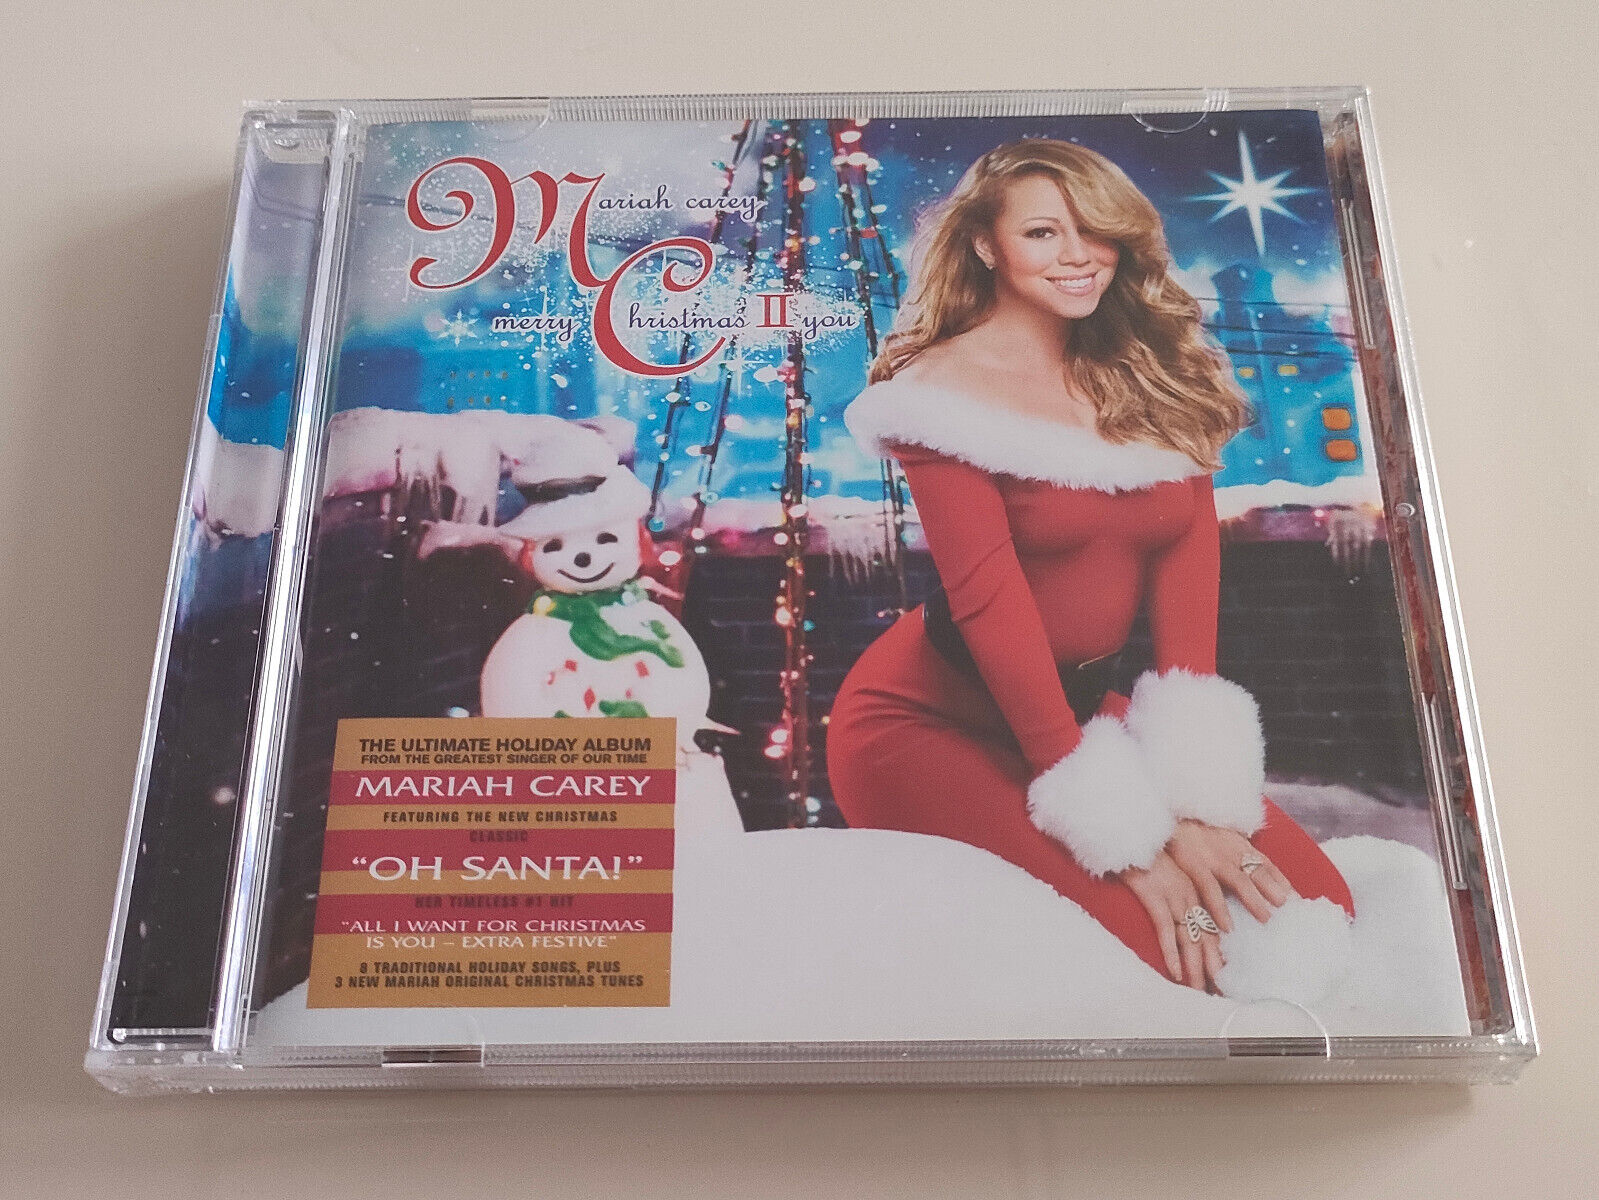 Merry Christmas II You by Mariah Carey (CD, 2010) AU Edition